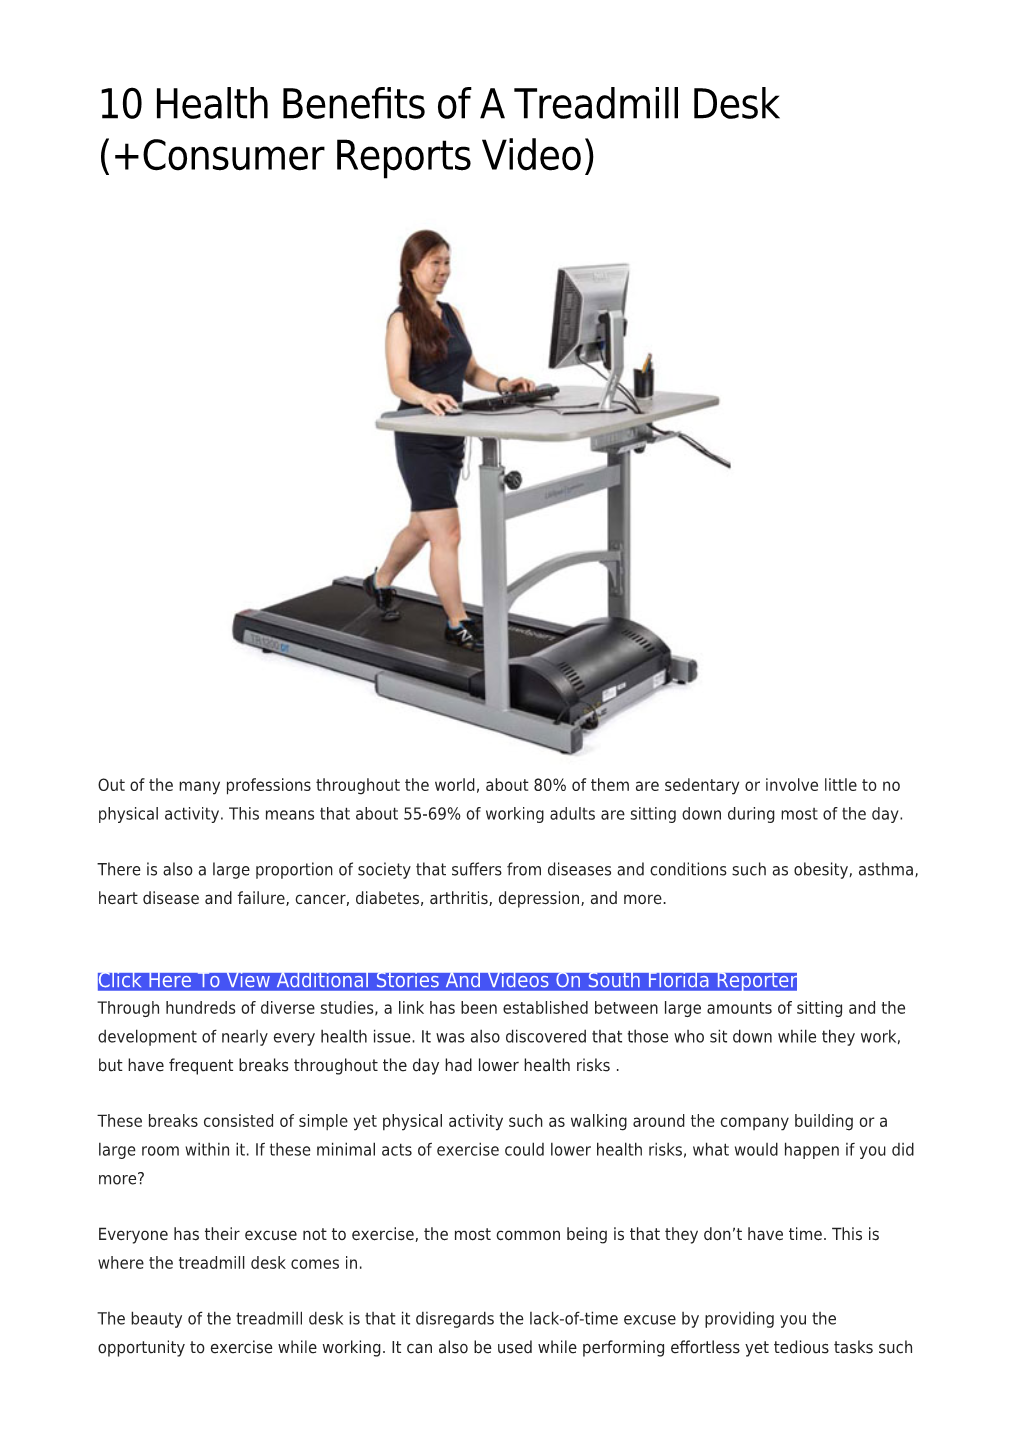 10 Health Benefits of a Treadmill Desk (+Consumer Reports Video)